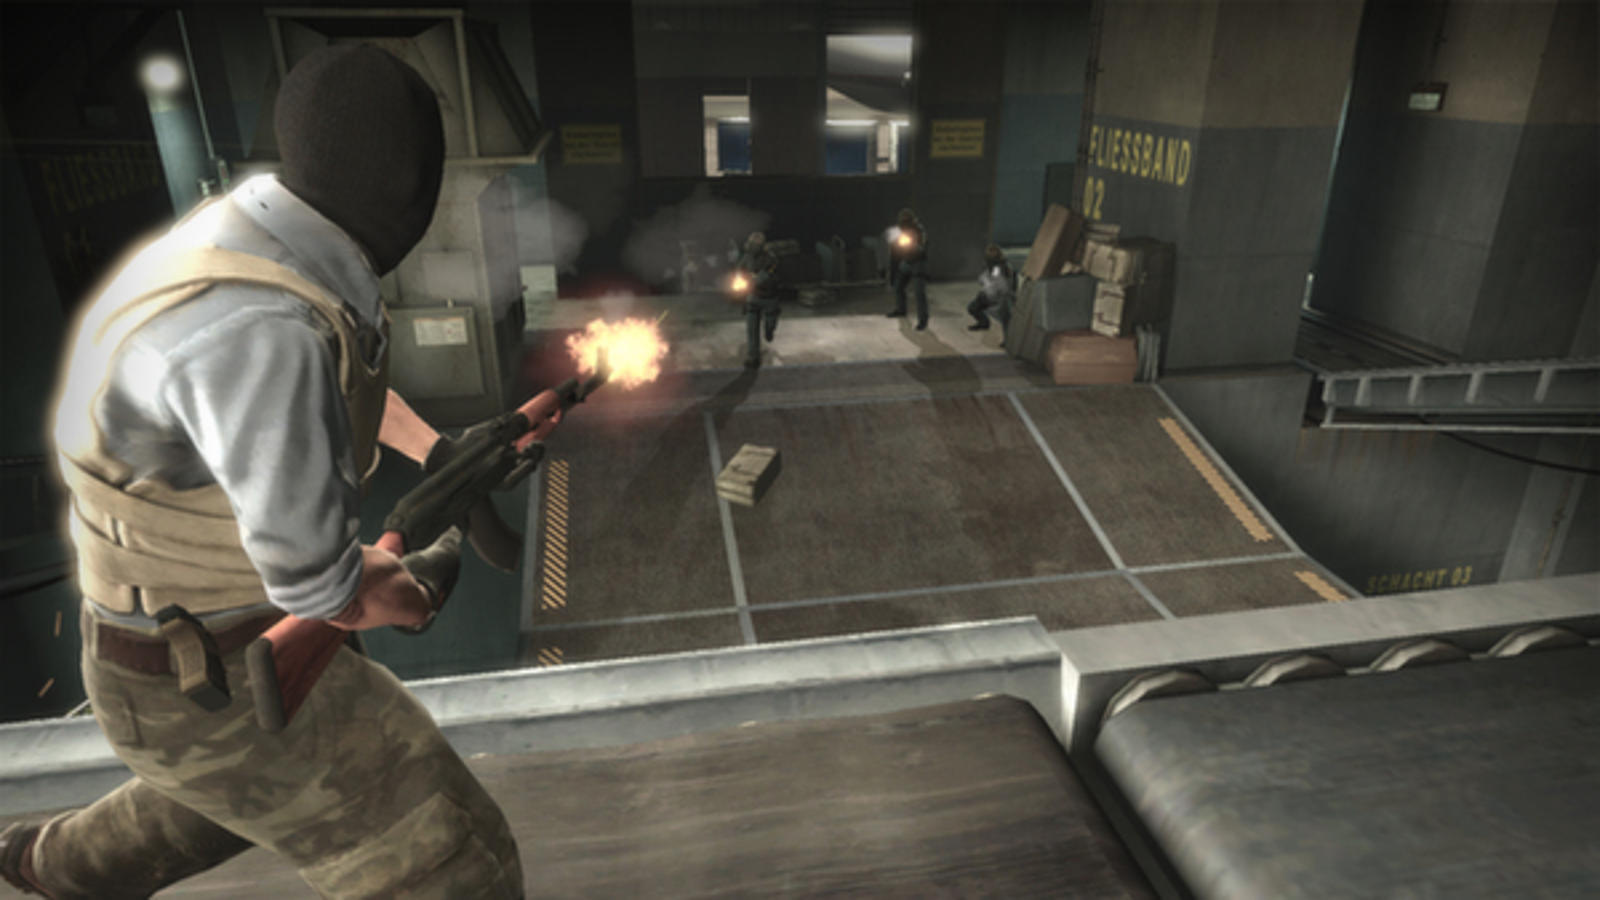 Counter Strike: Global Offensive (CS:GO)